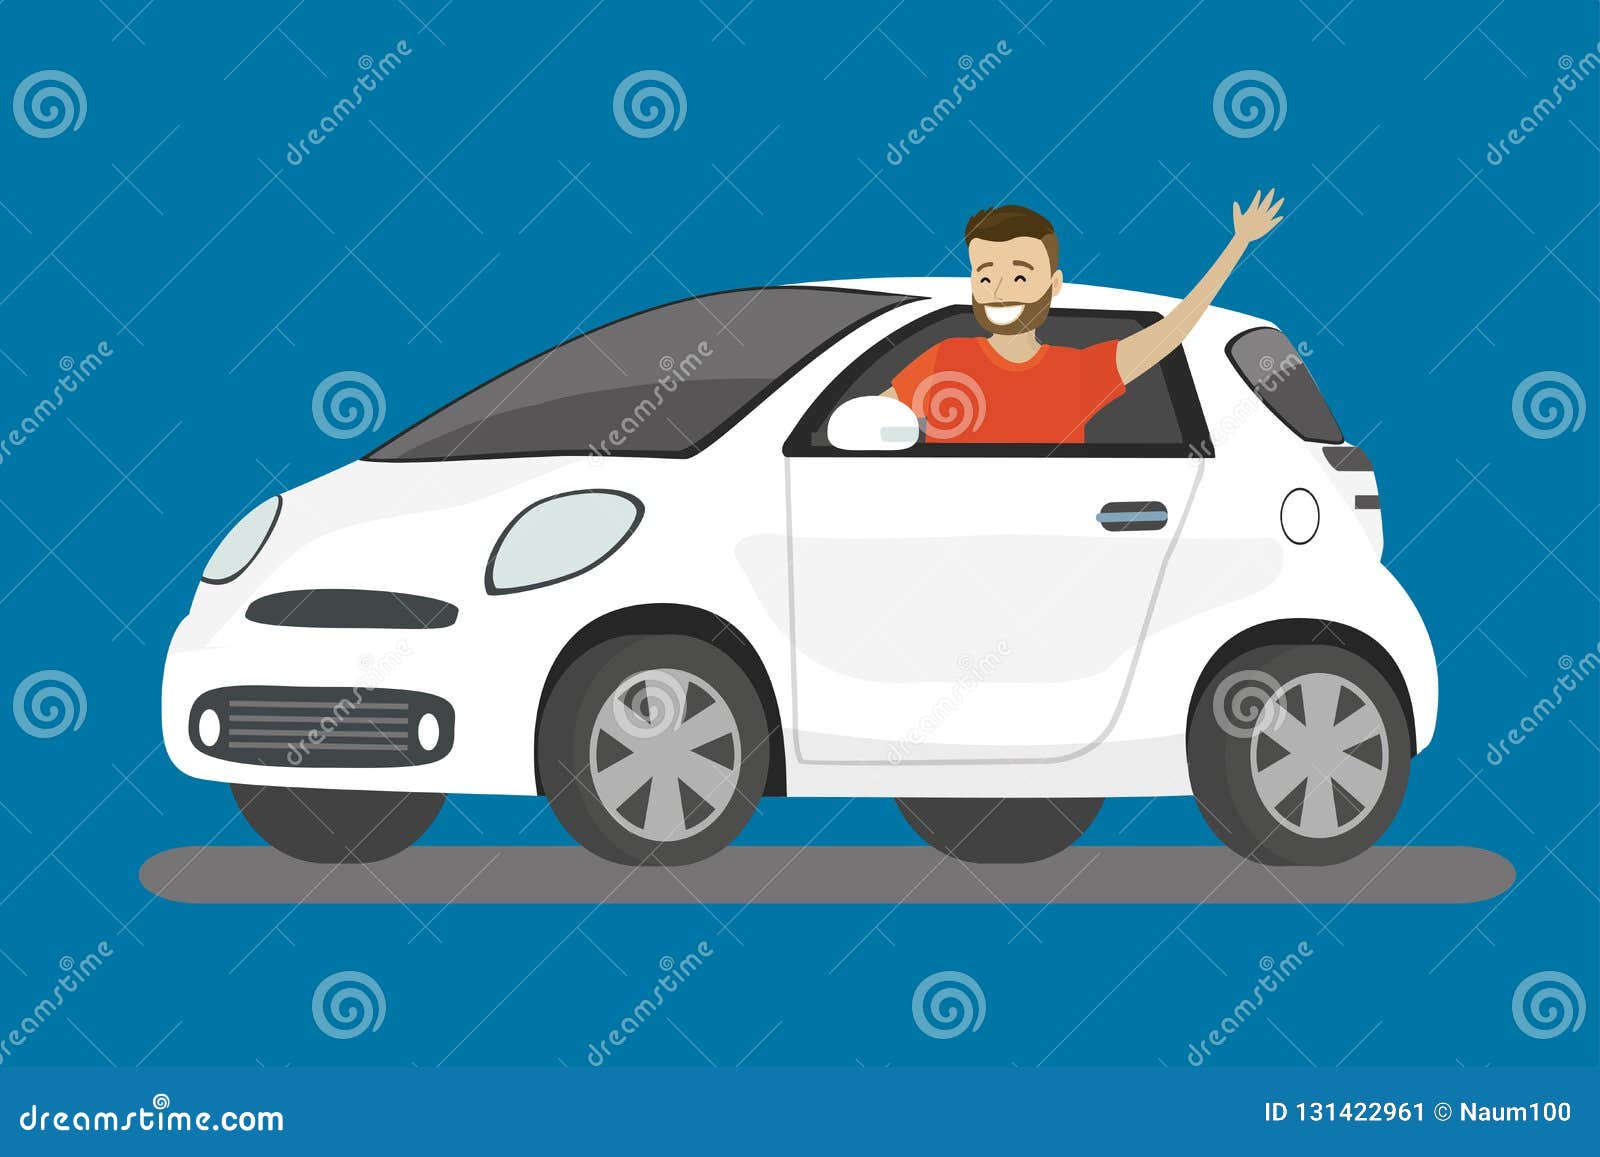 happy cartoon caucasian man rides in white car,